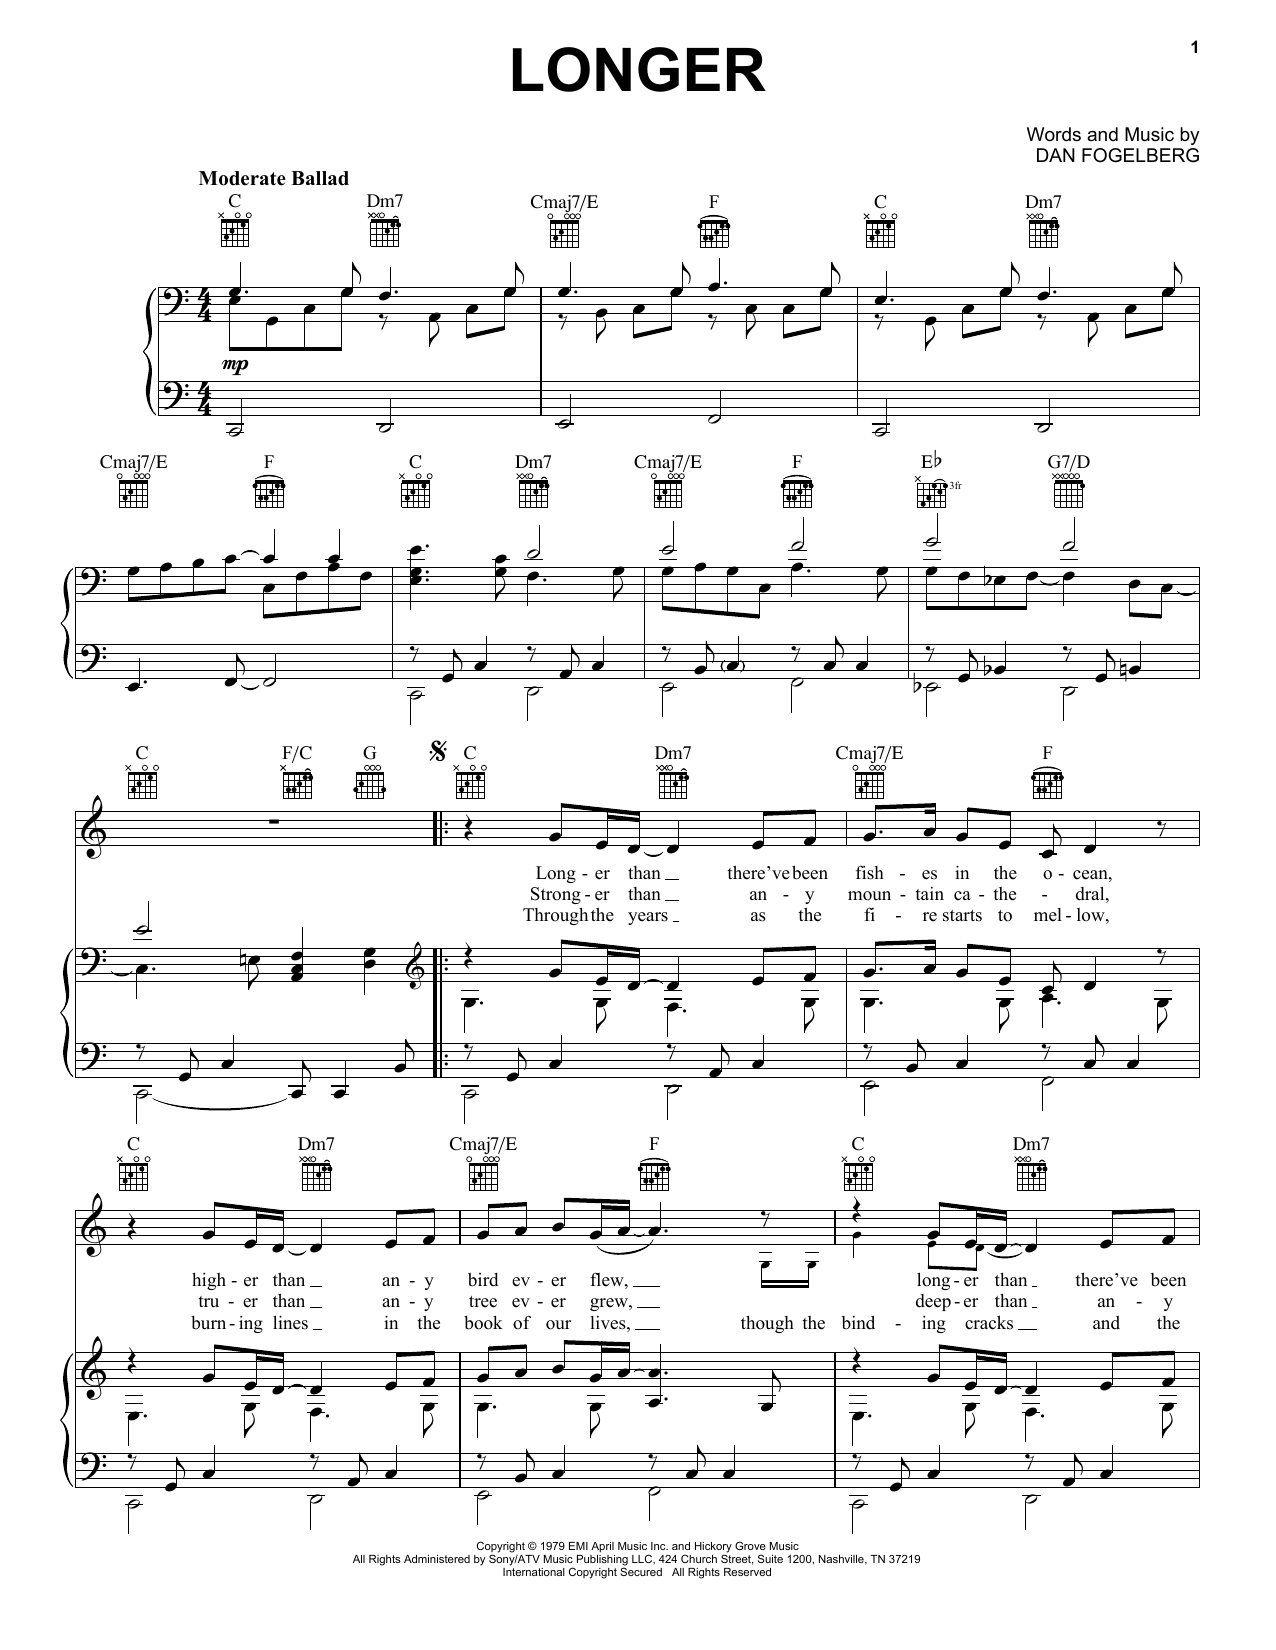 Download Dan Fogelberg Longer Sheet Music and learn how to play Ukulele PDF digital score in minutes